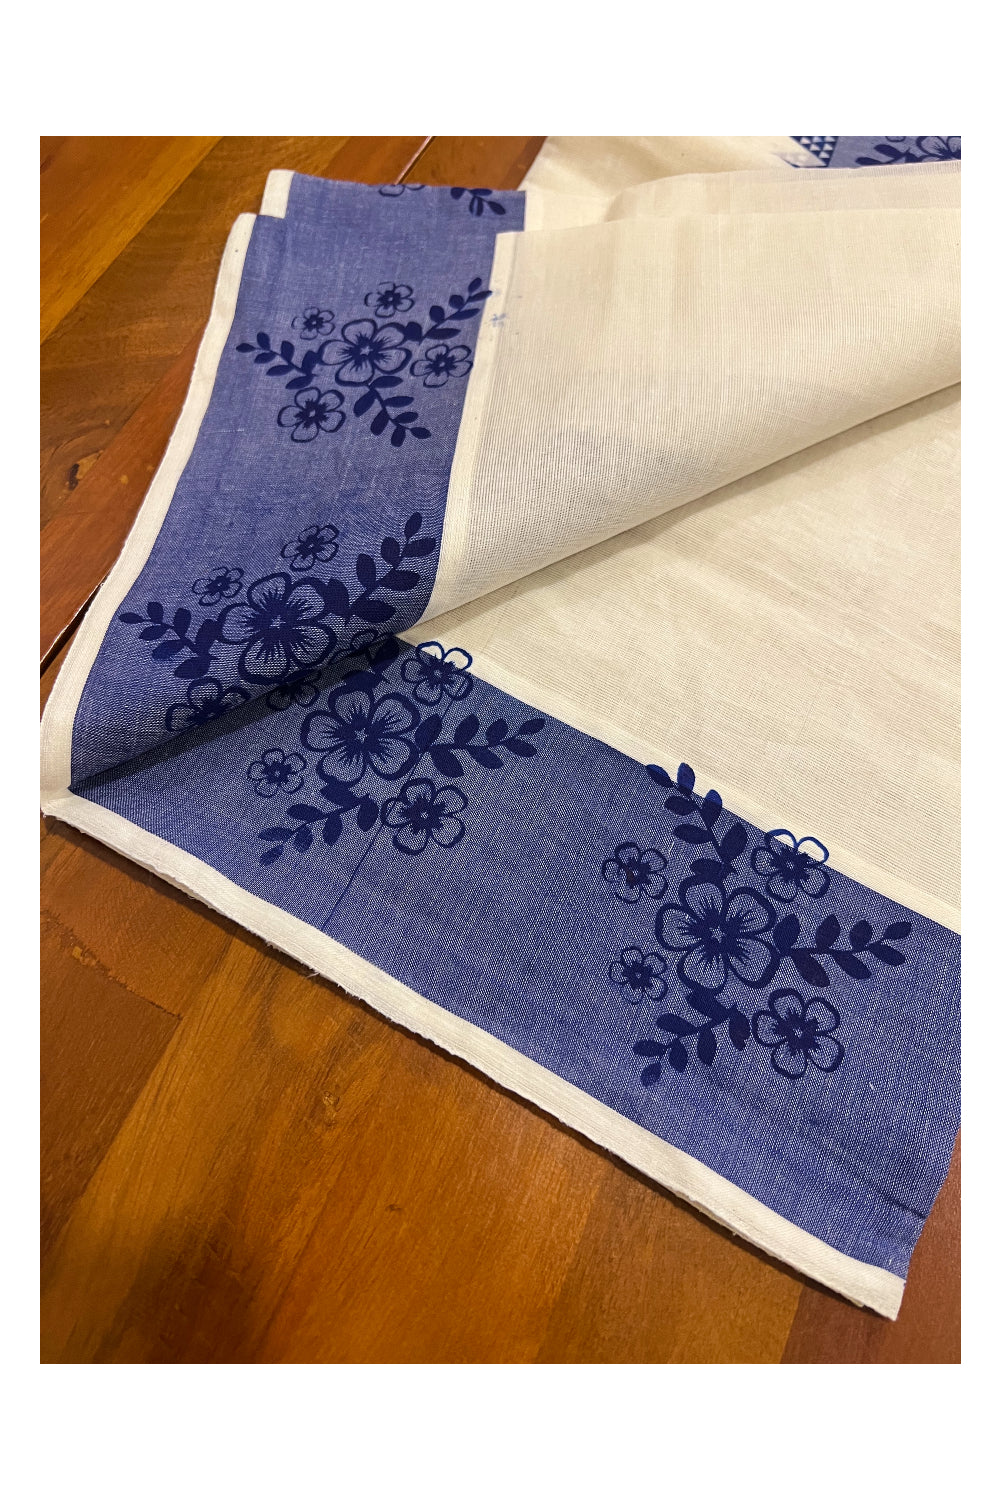 Kerala Cotton Set Mundu (Mundum Neriyathum) with Blue Floral Temple Block Prints on Border